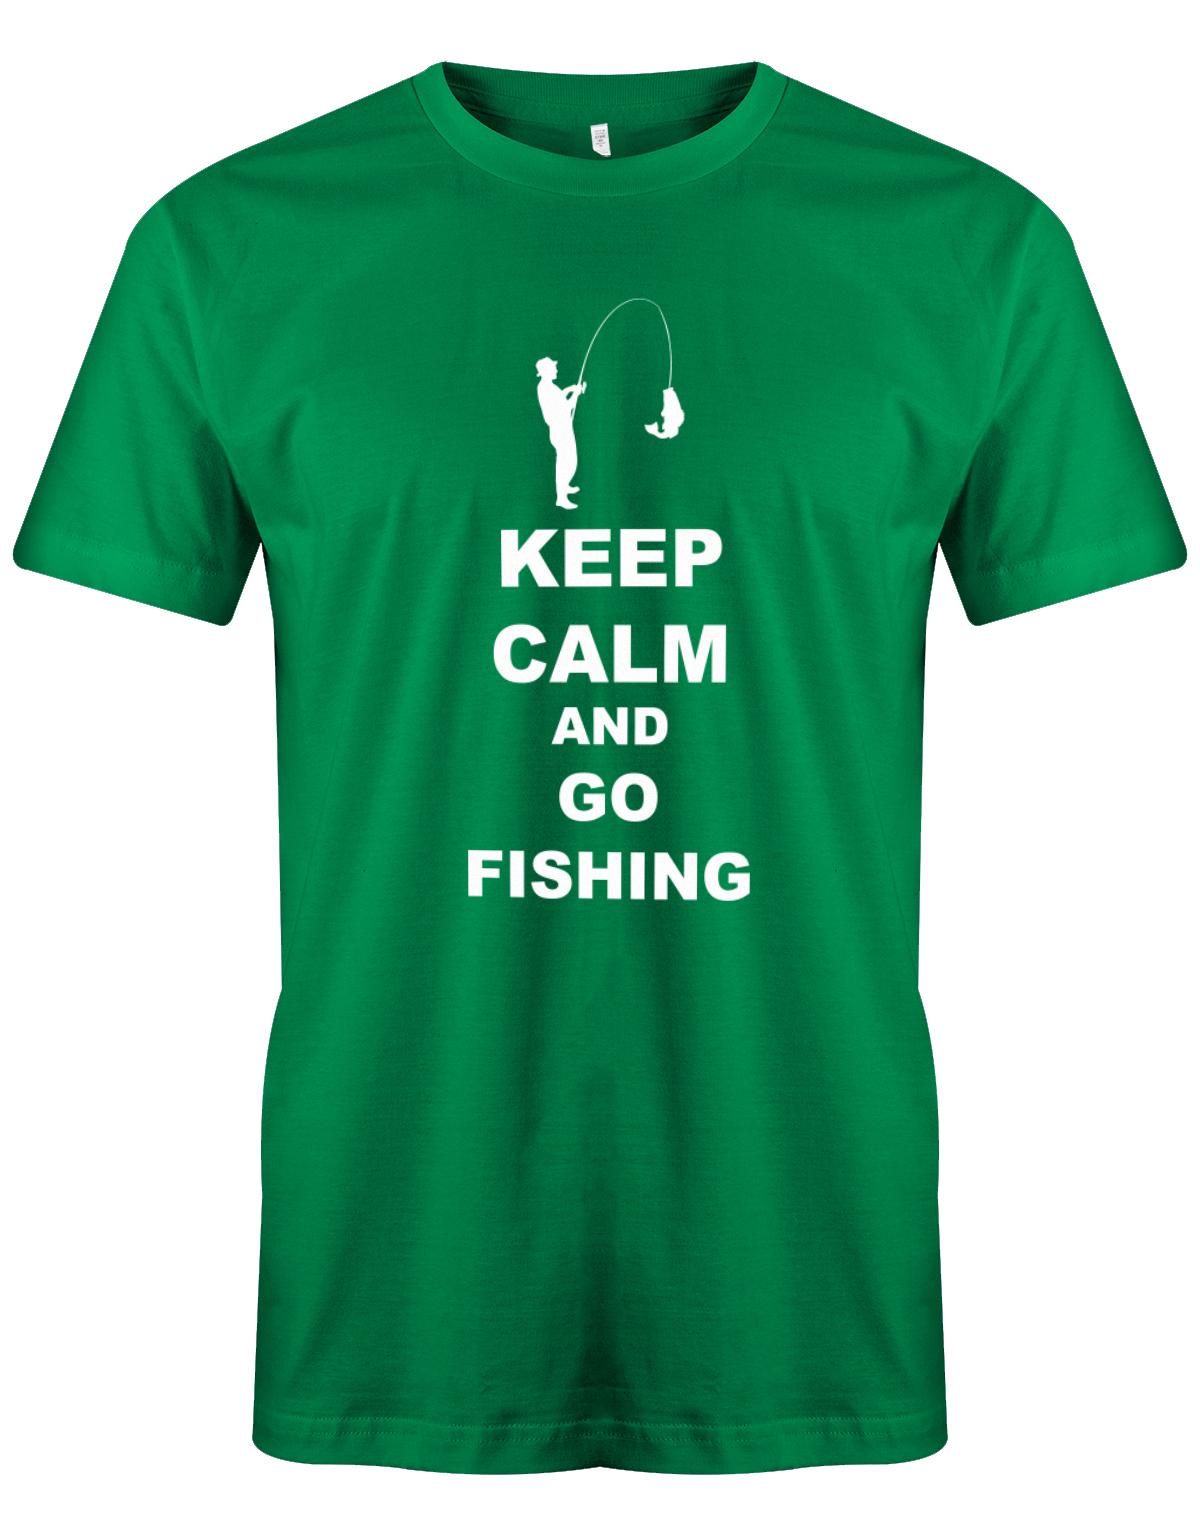 Keep-Calm-and-go-Fishing-herren-Shirt-Gruen